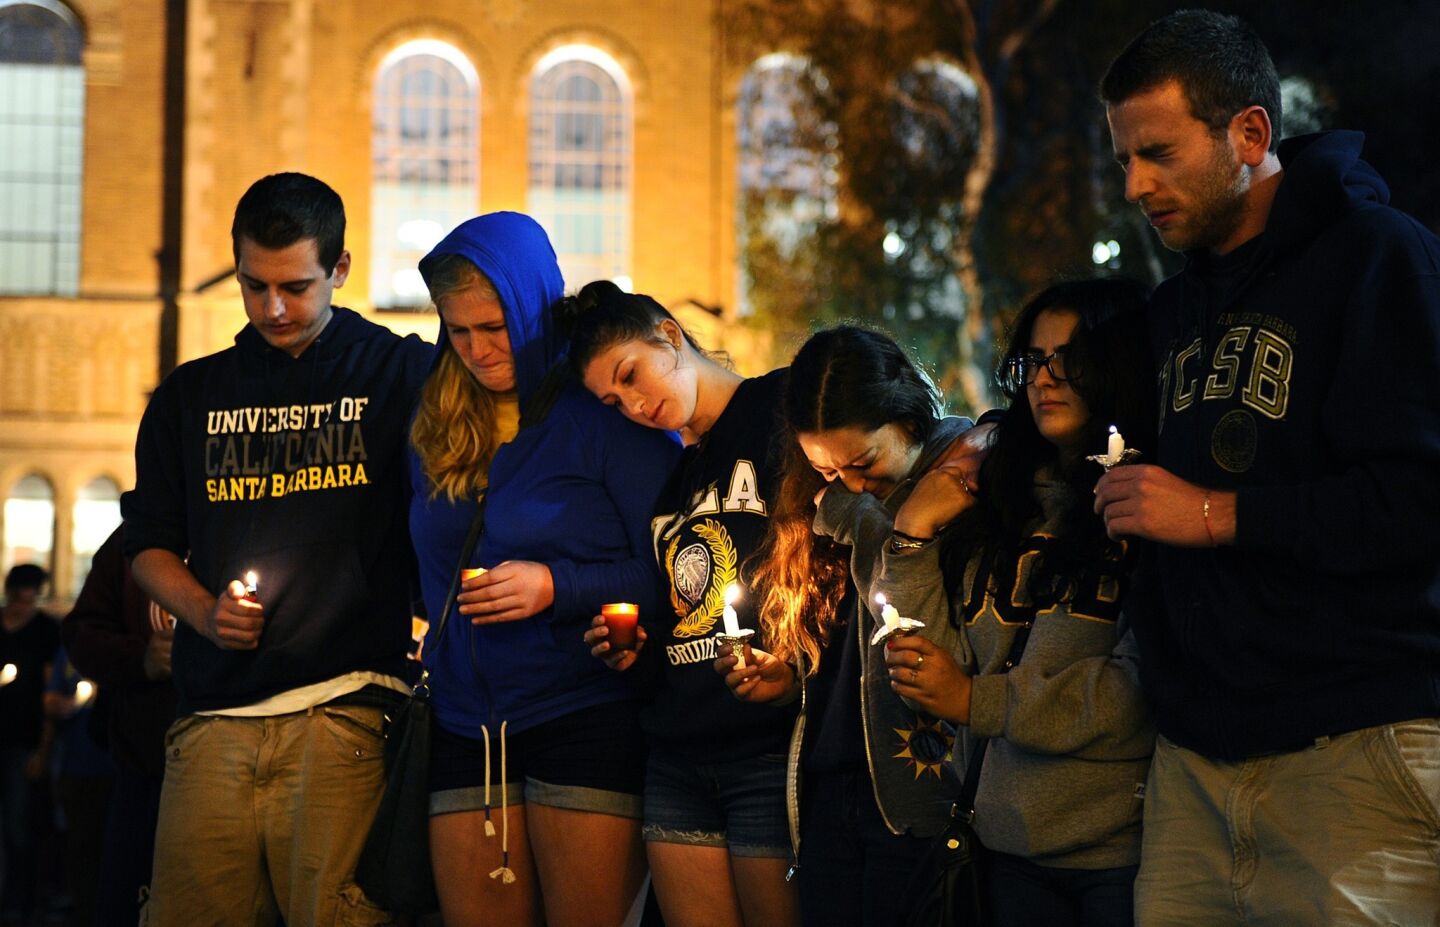 UCLA candlelight vigil